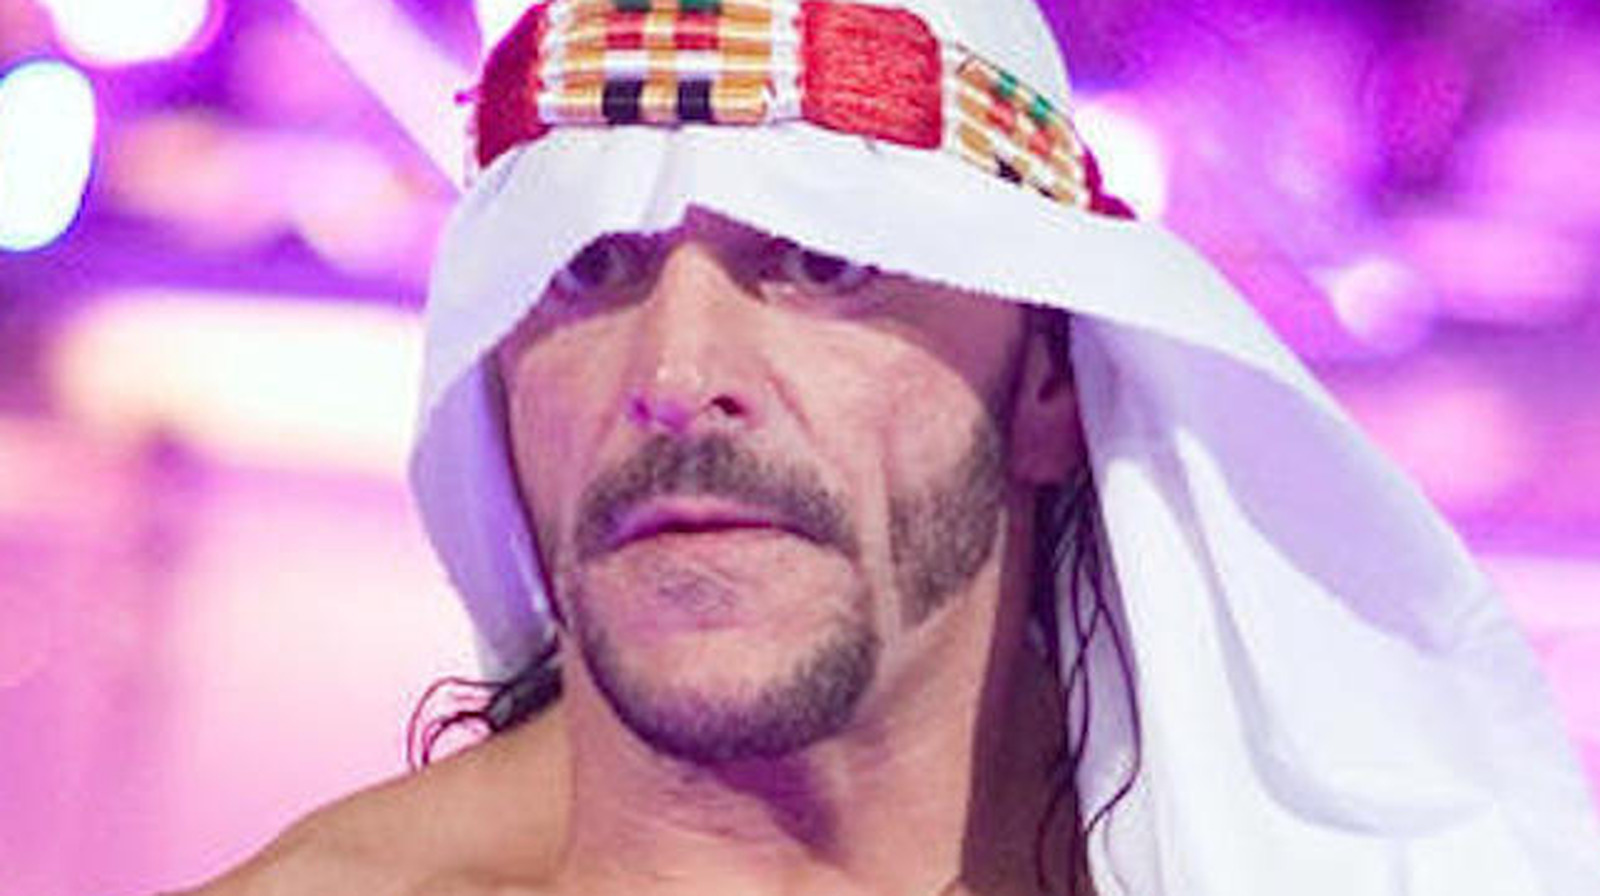 ECW Legend Sabu, según se informa, hospitalizado después de una emergencia médica